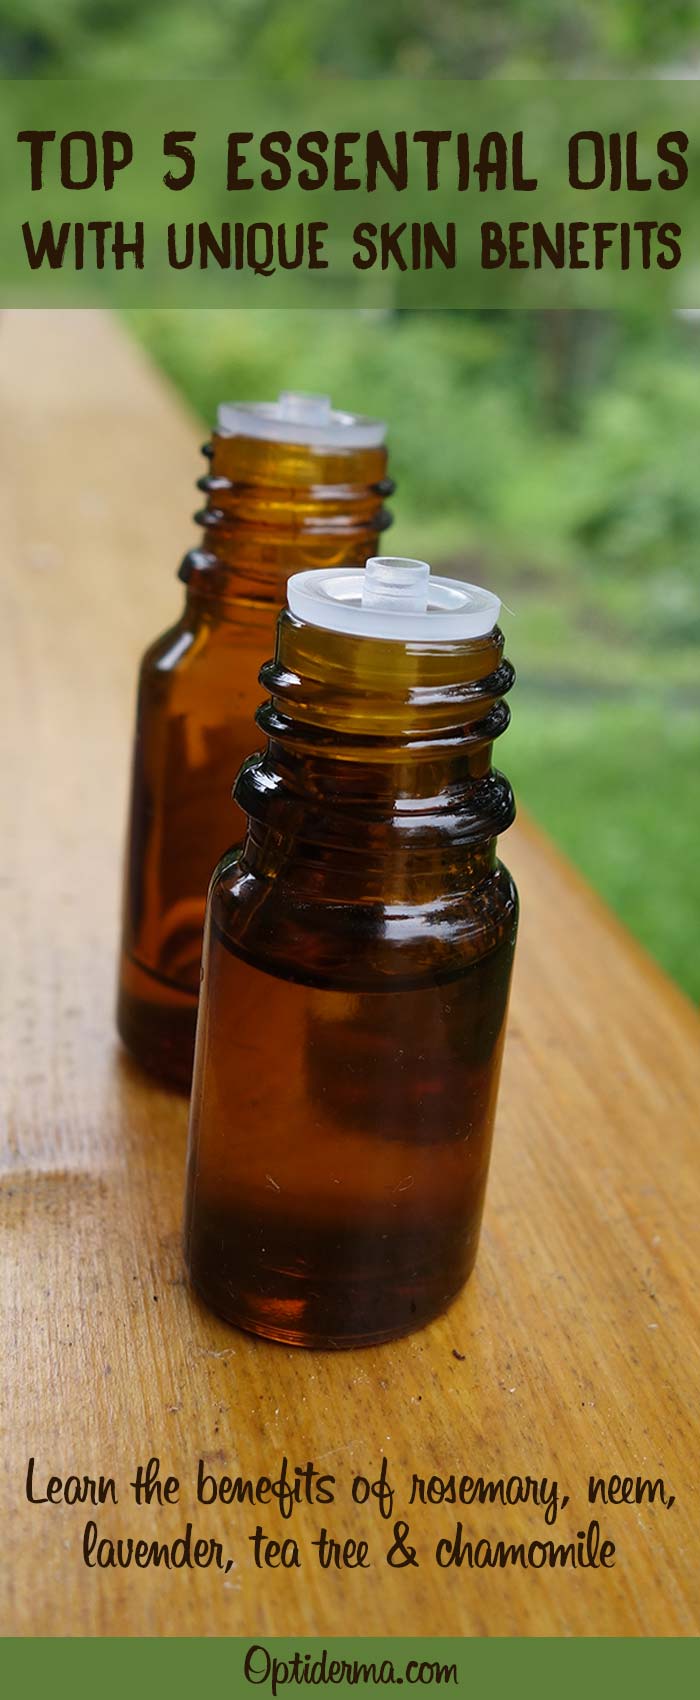 Top 5 Essential Oils with Unique Skin Benefits